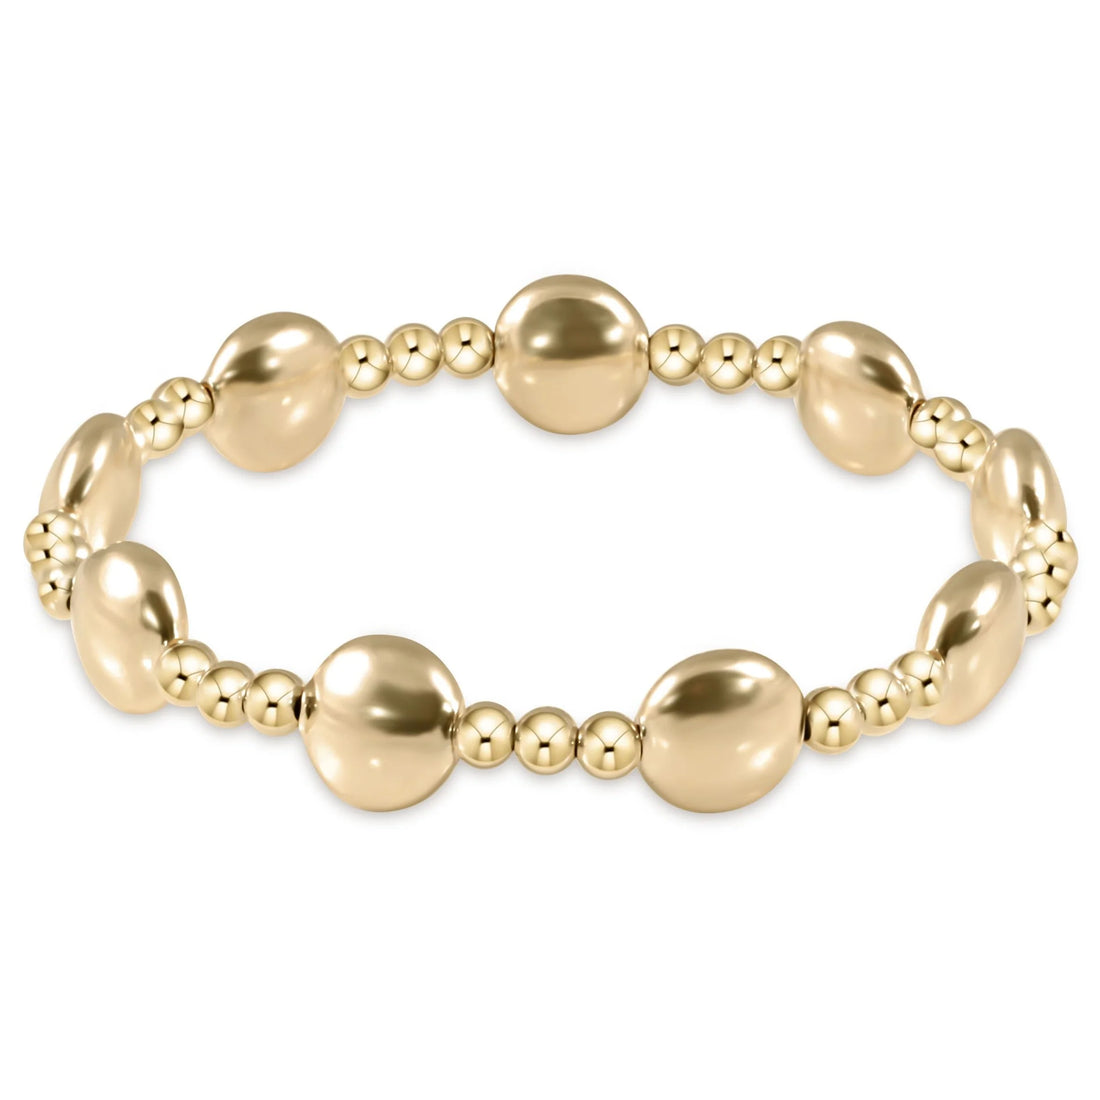 Honesty gold sincerity pattern 10mm bead bracelet